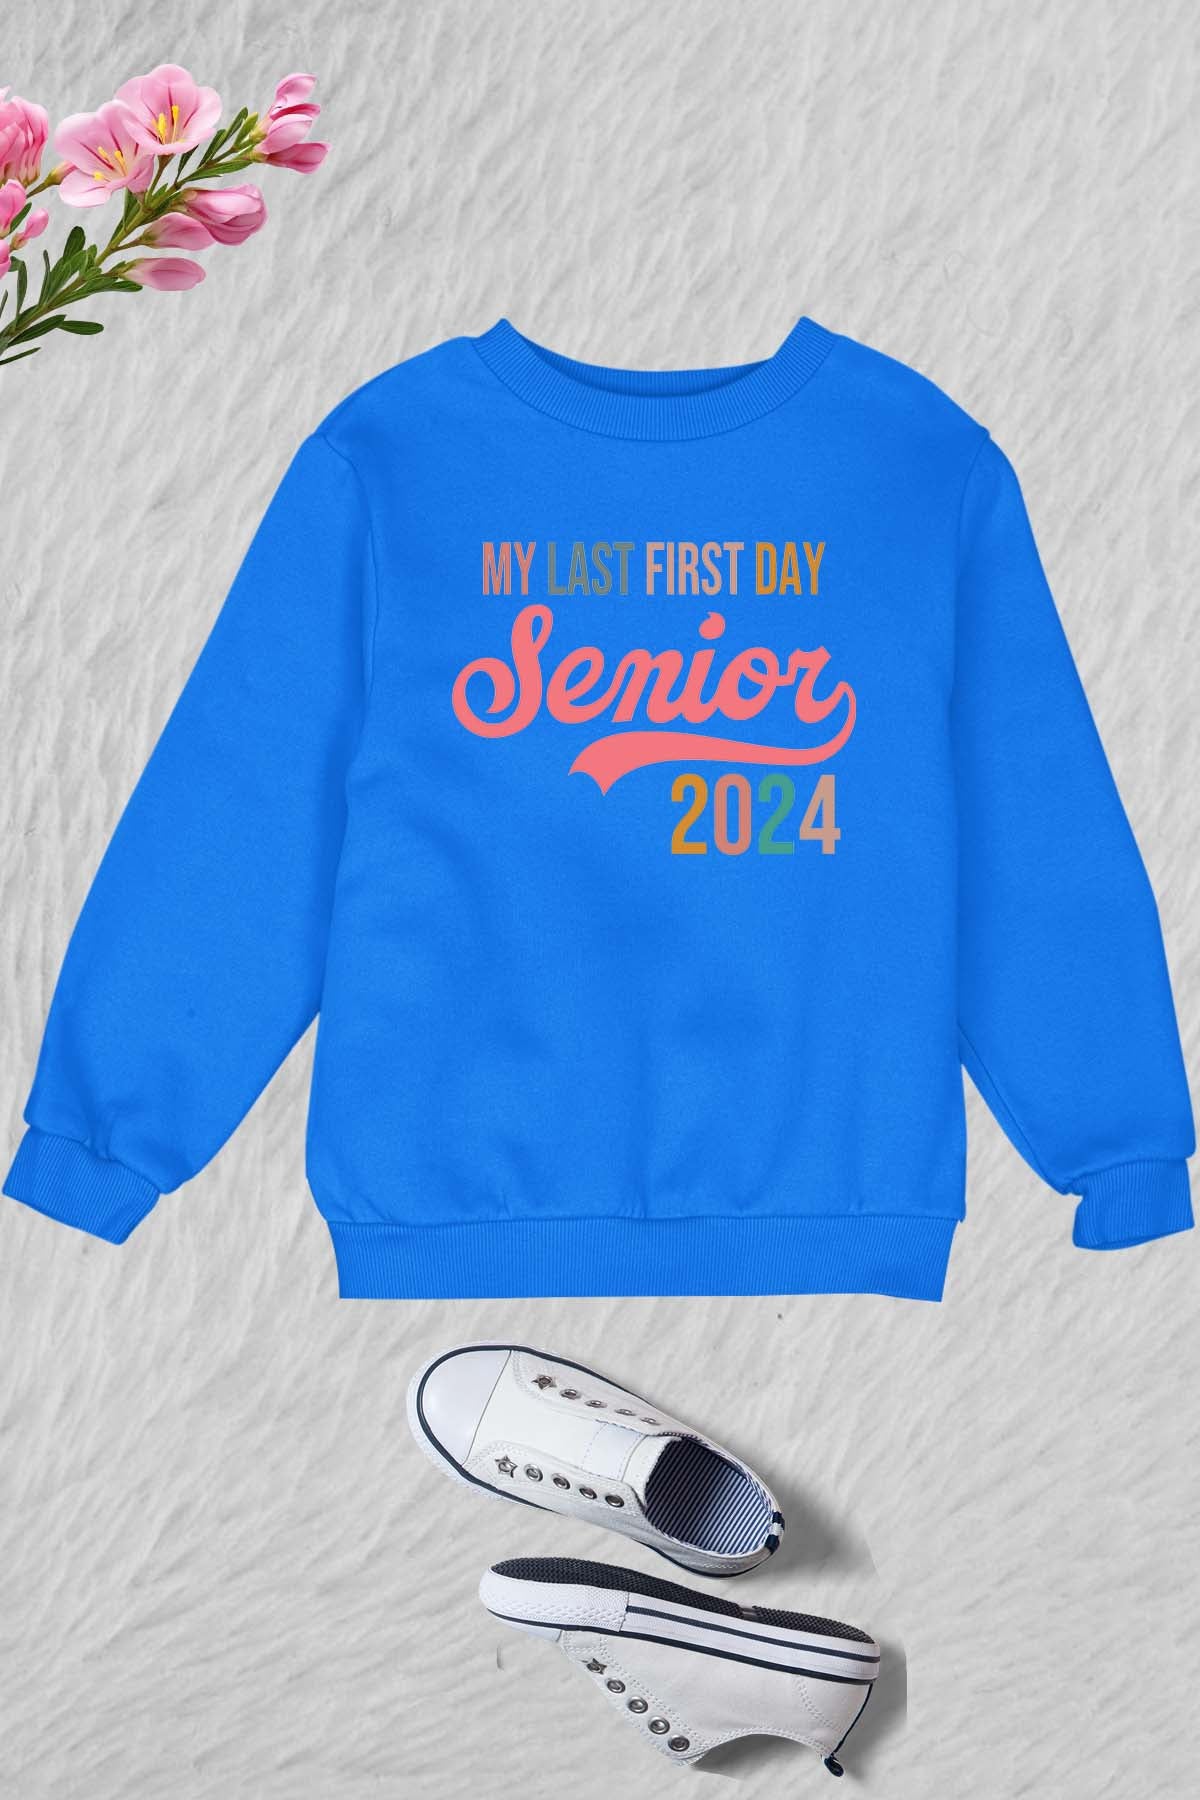 My Last First Day Senior 2024 Sweatshirt